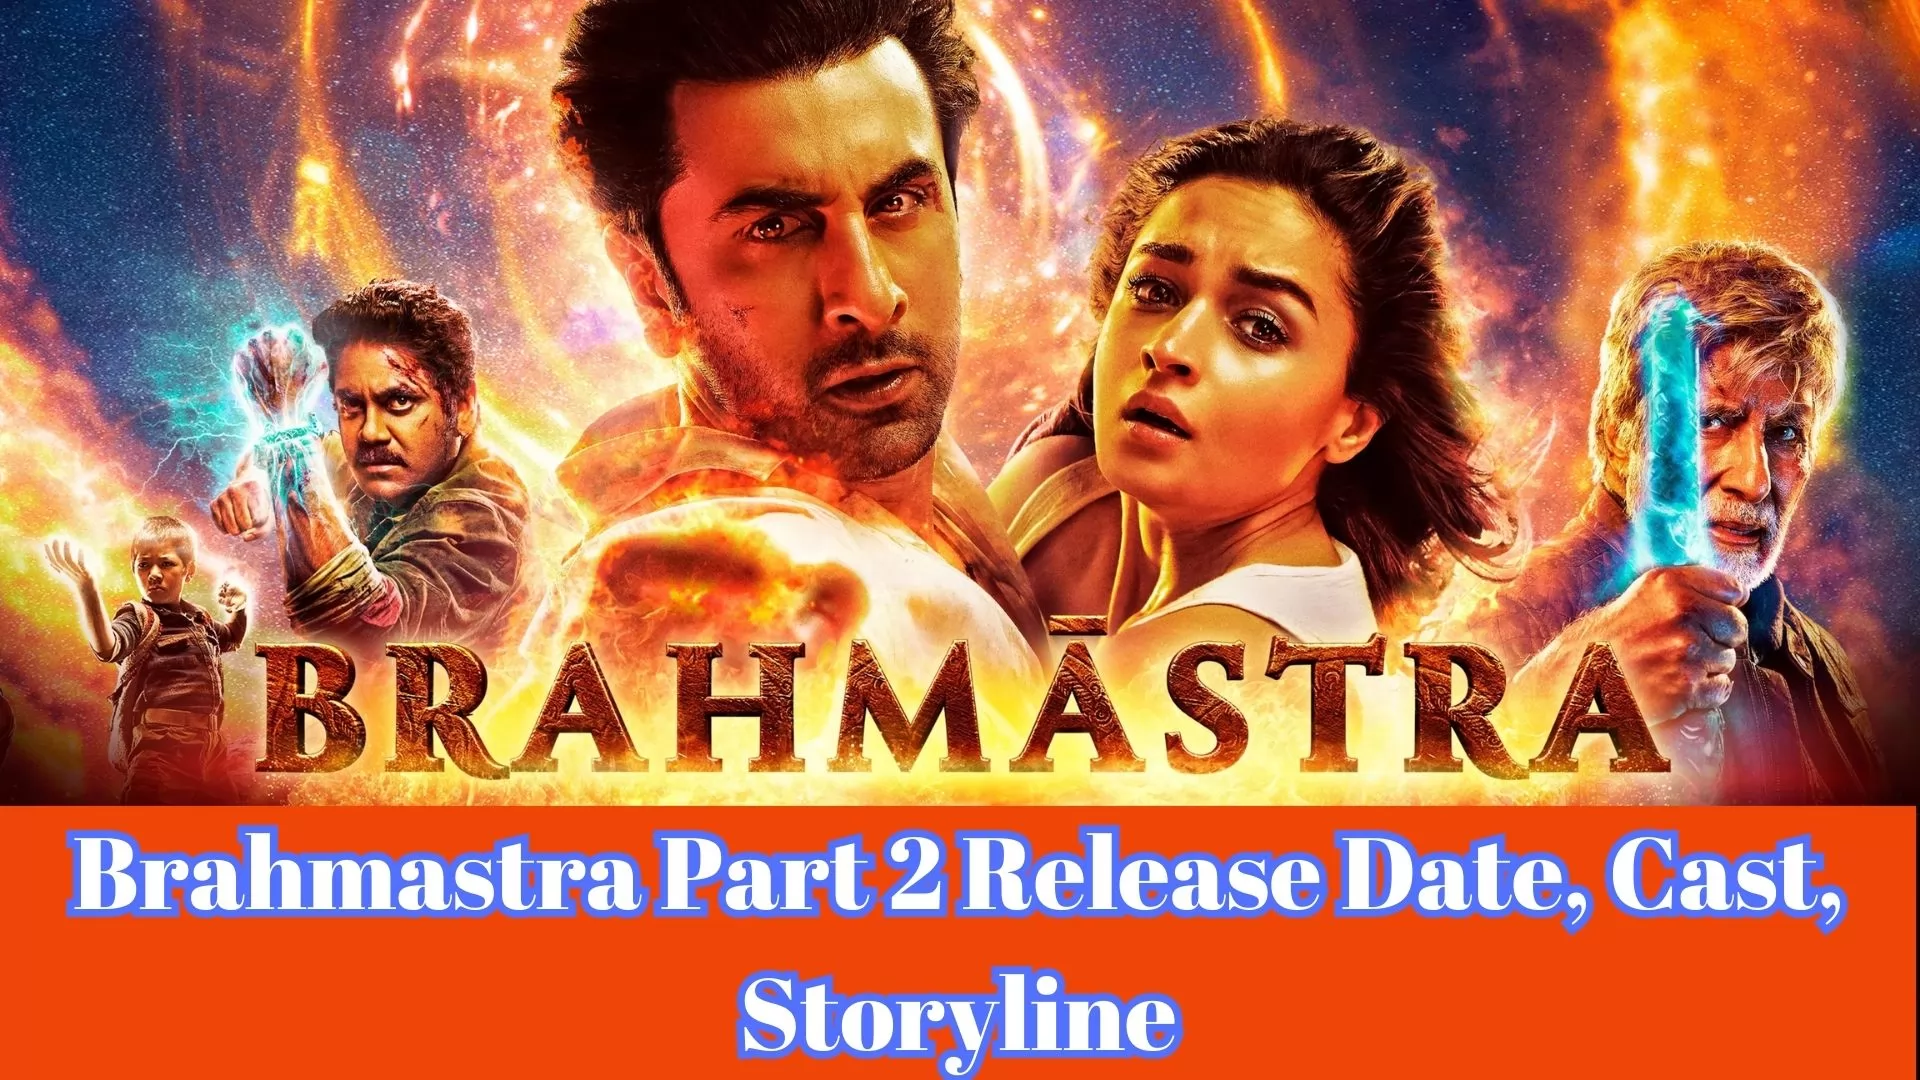 Brahmastra Part 2 Release Date, Cast, Storyline